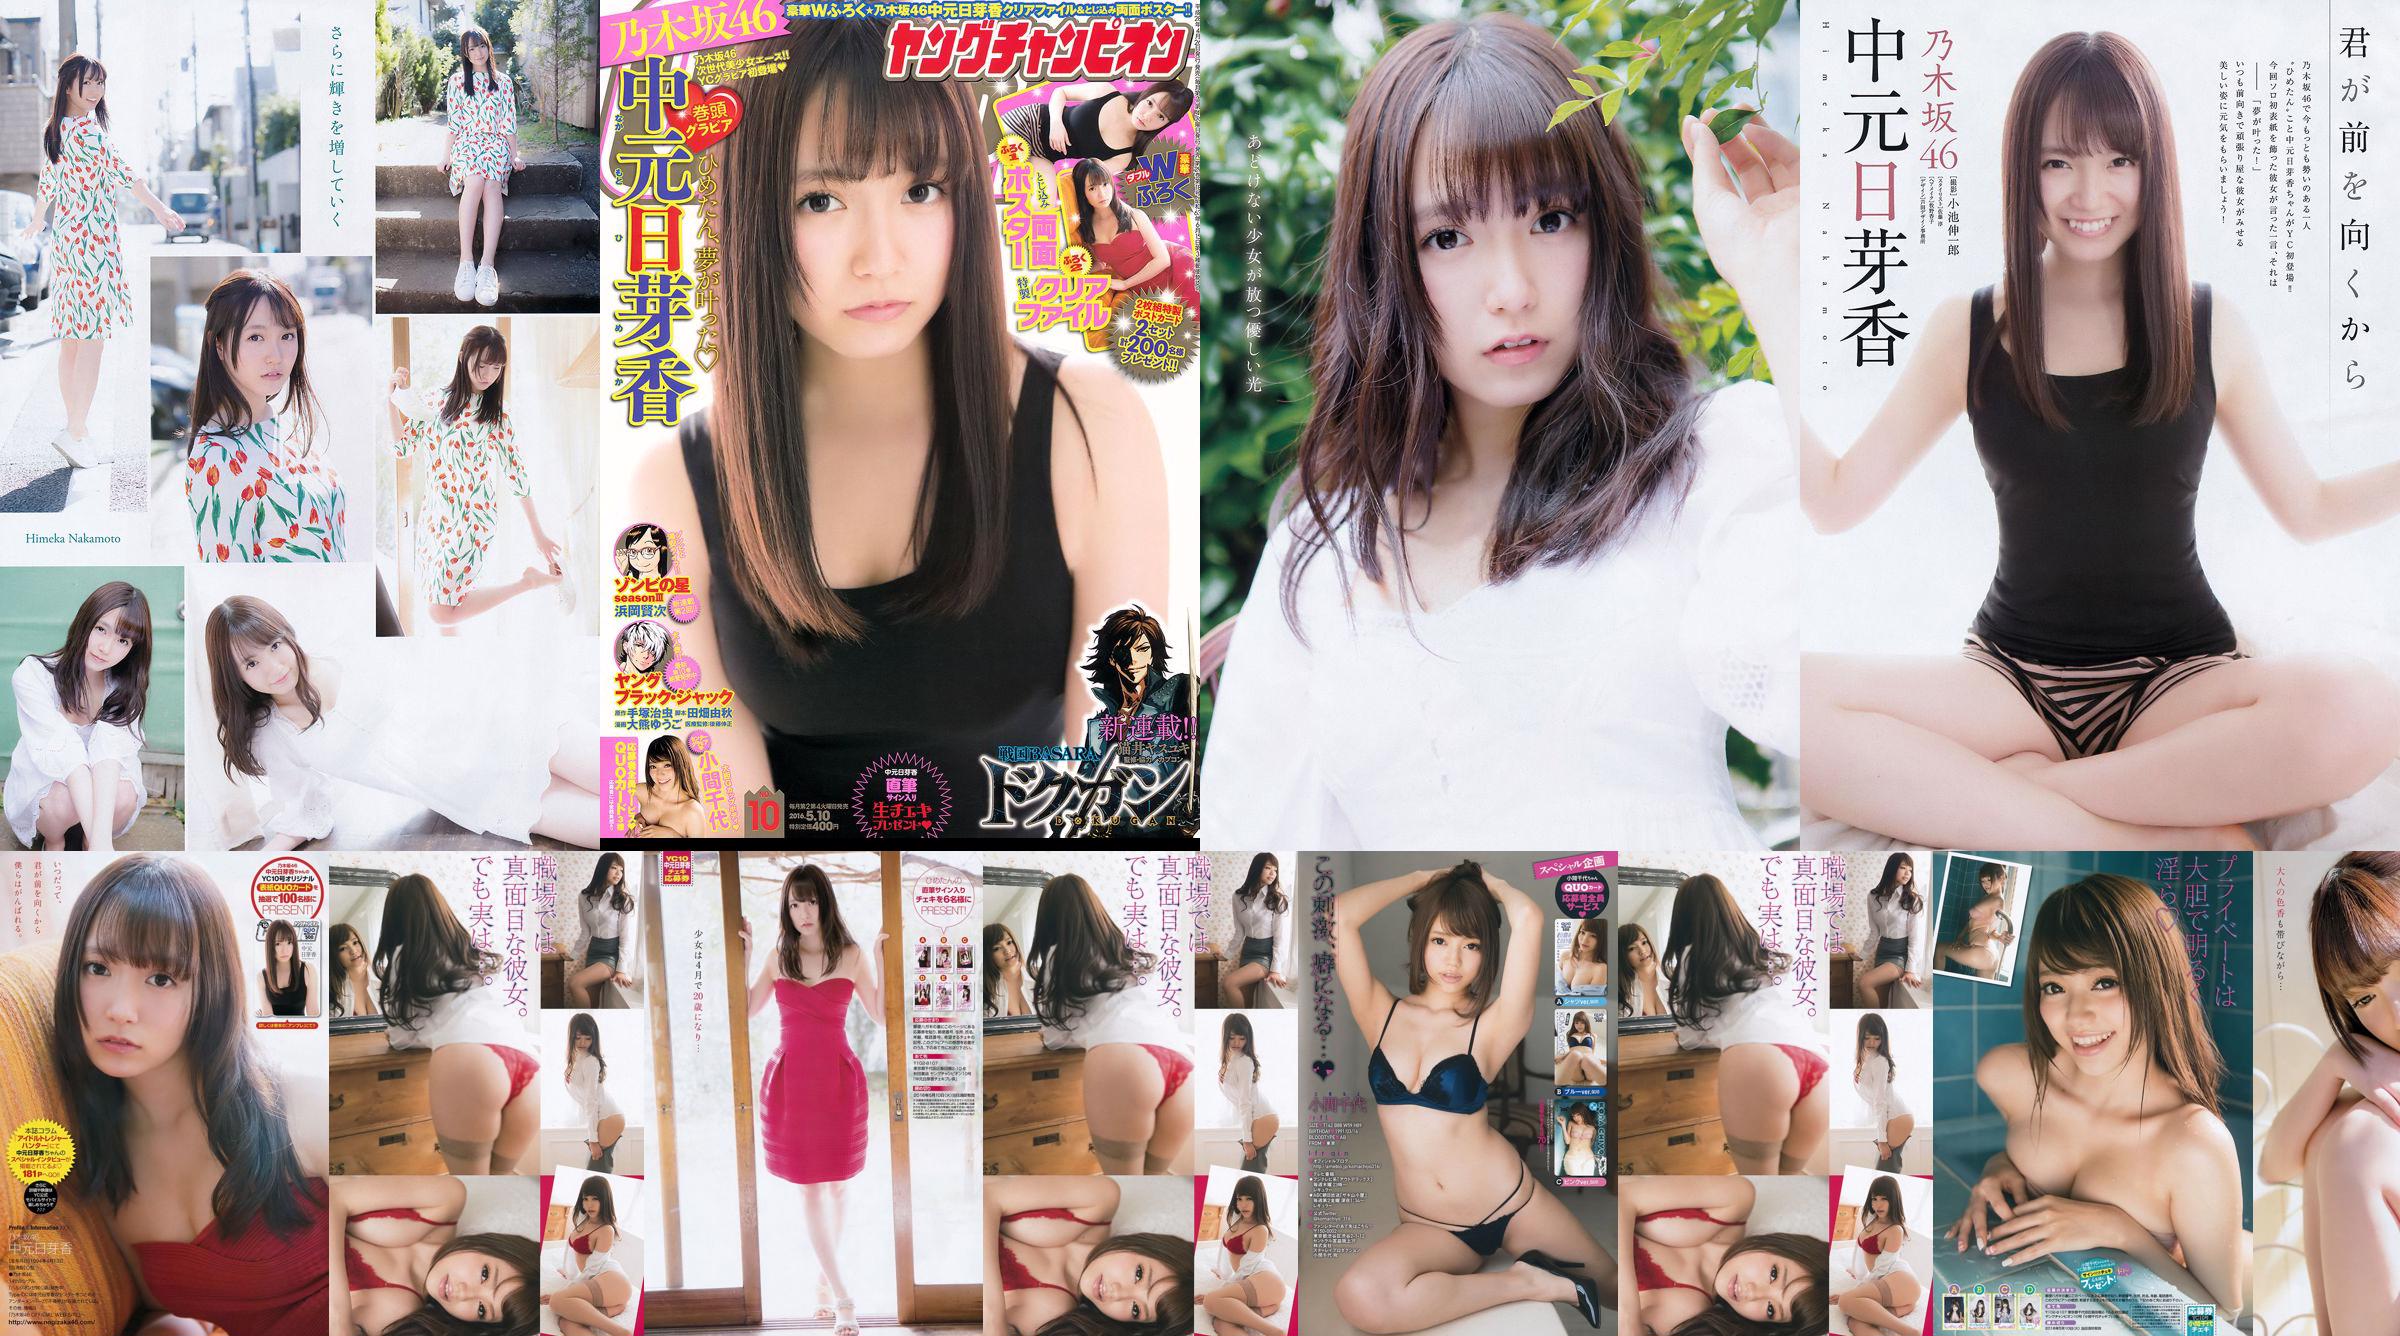 [Jeune Champion] Nakamoto Nichiko Koma Chiyo 2016 Magazine photo n ° 10 No.fa569d Page 7